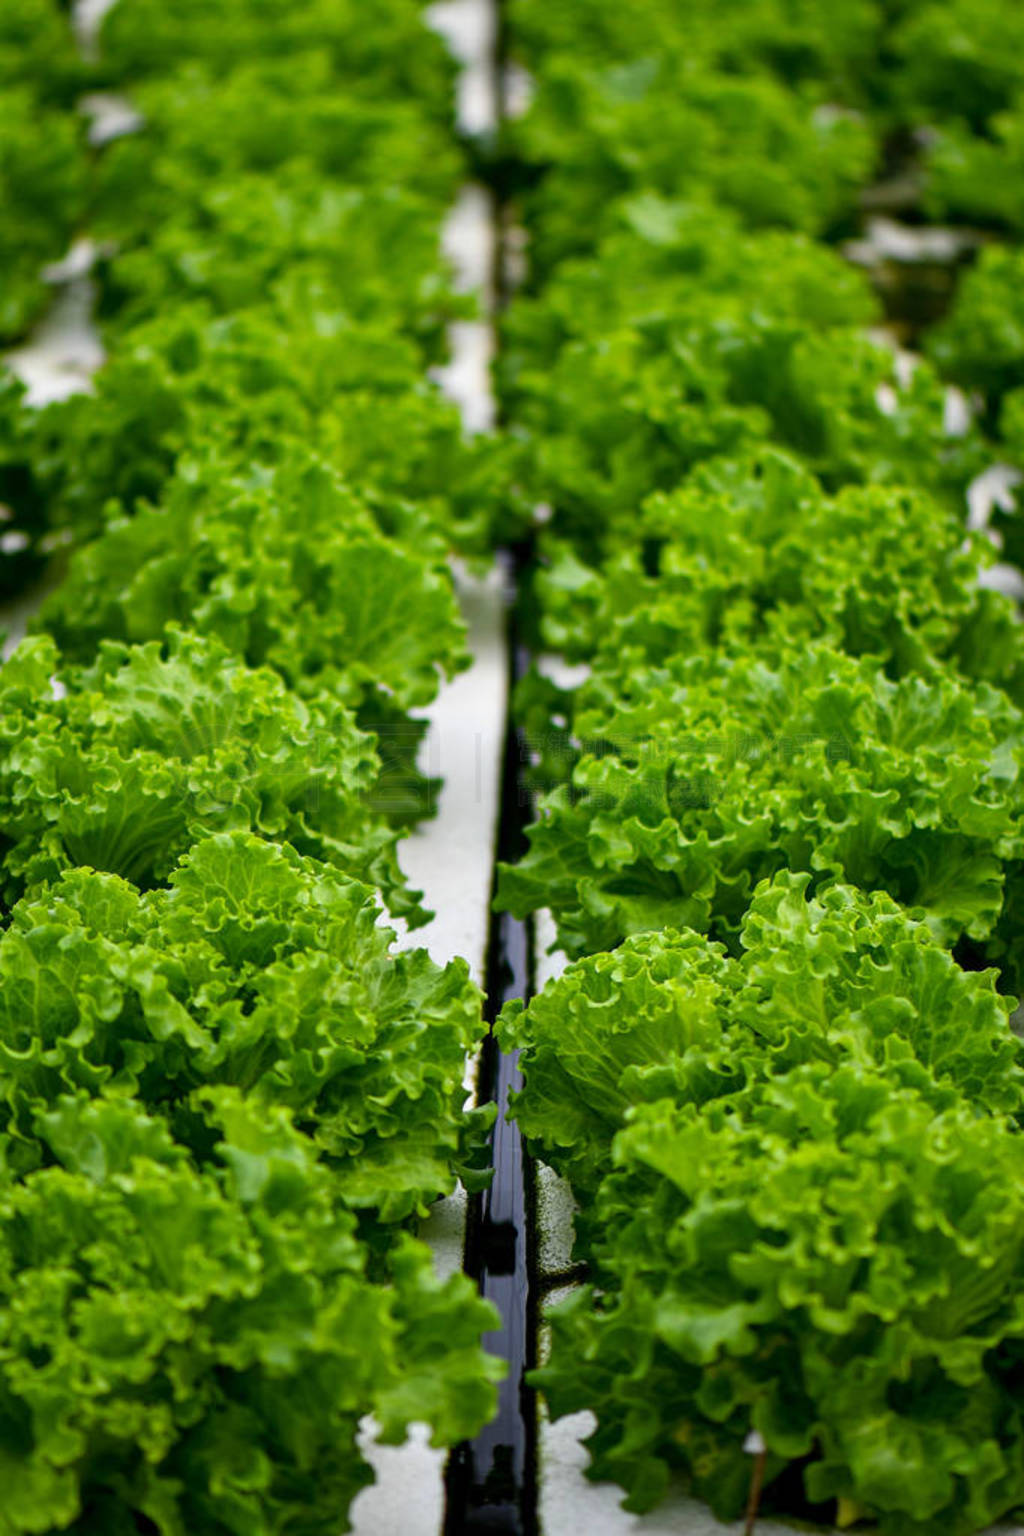 Hydroponic lettuce farming on white styrofoam.